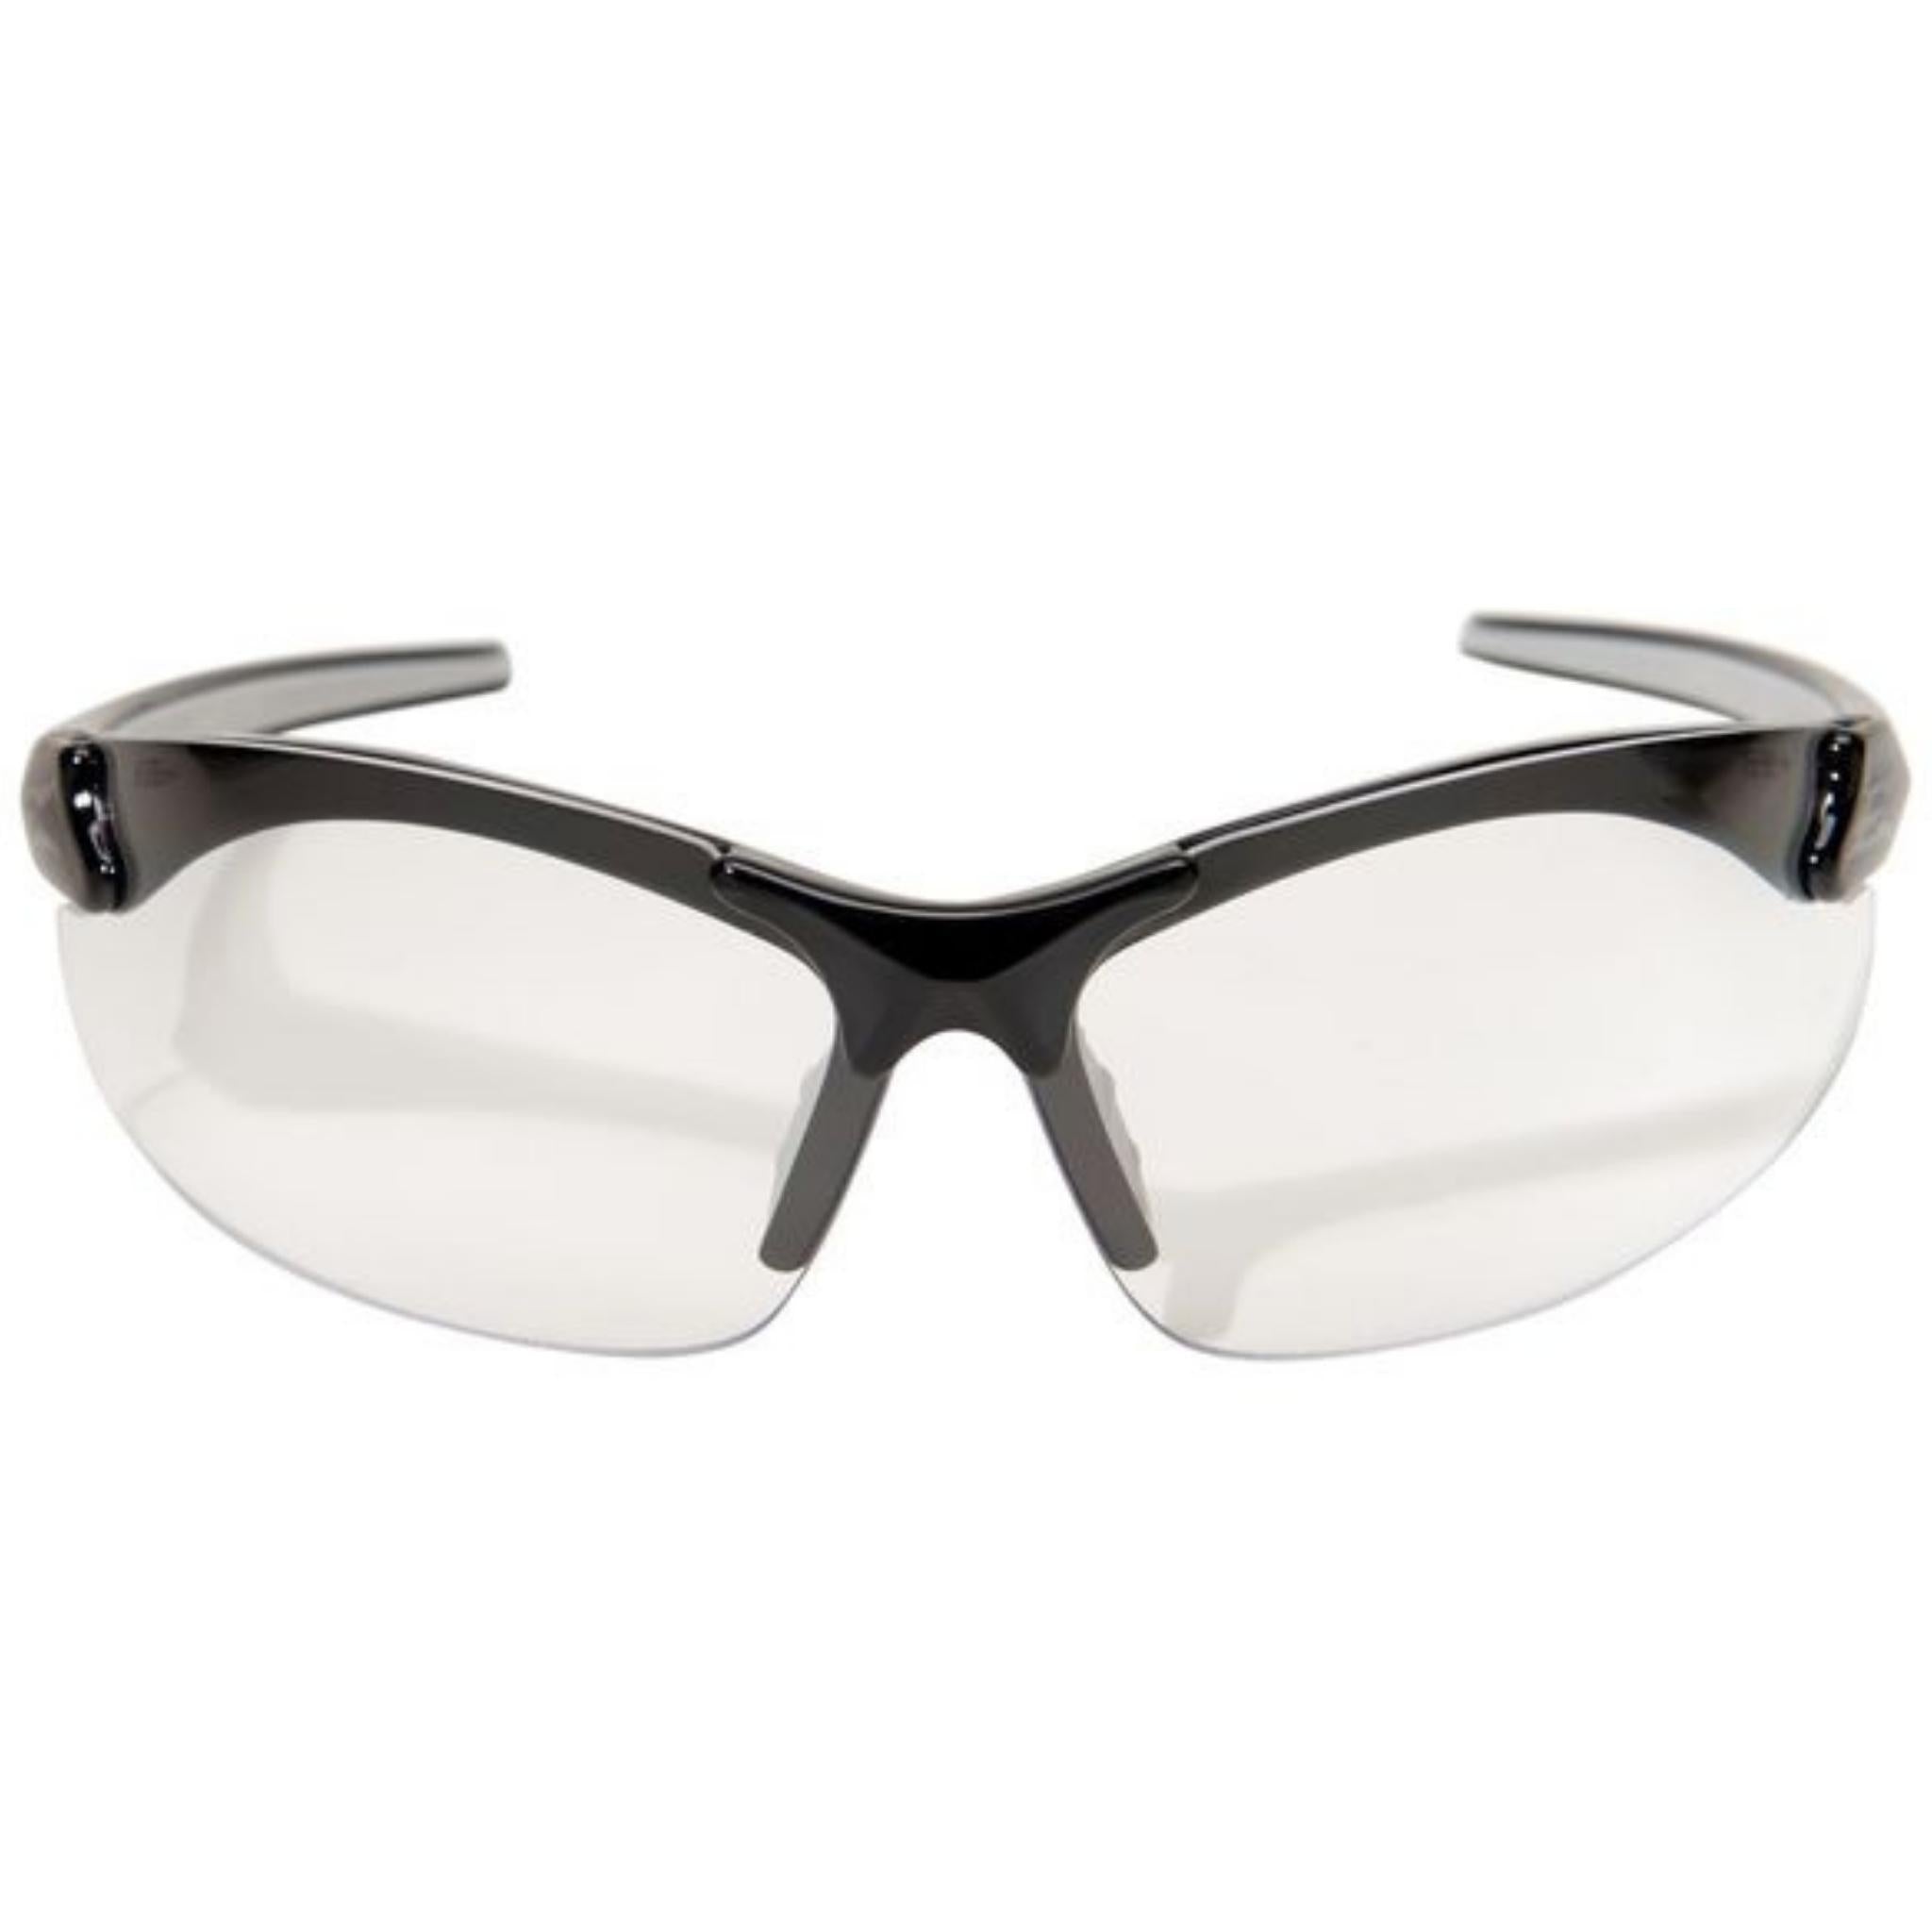 EDGE DZ111-2.0-G2 Zorge G2 Safety Glasses, Black Frame, Clear 2.0 Progressive Magnification Lens